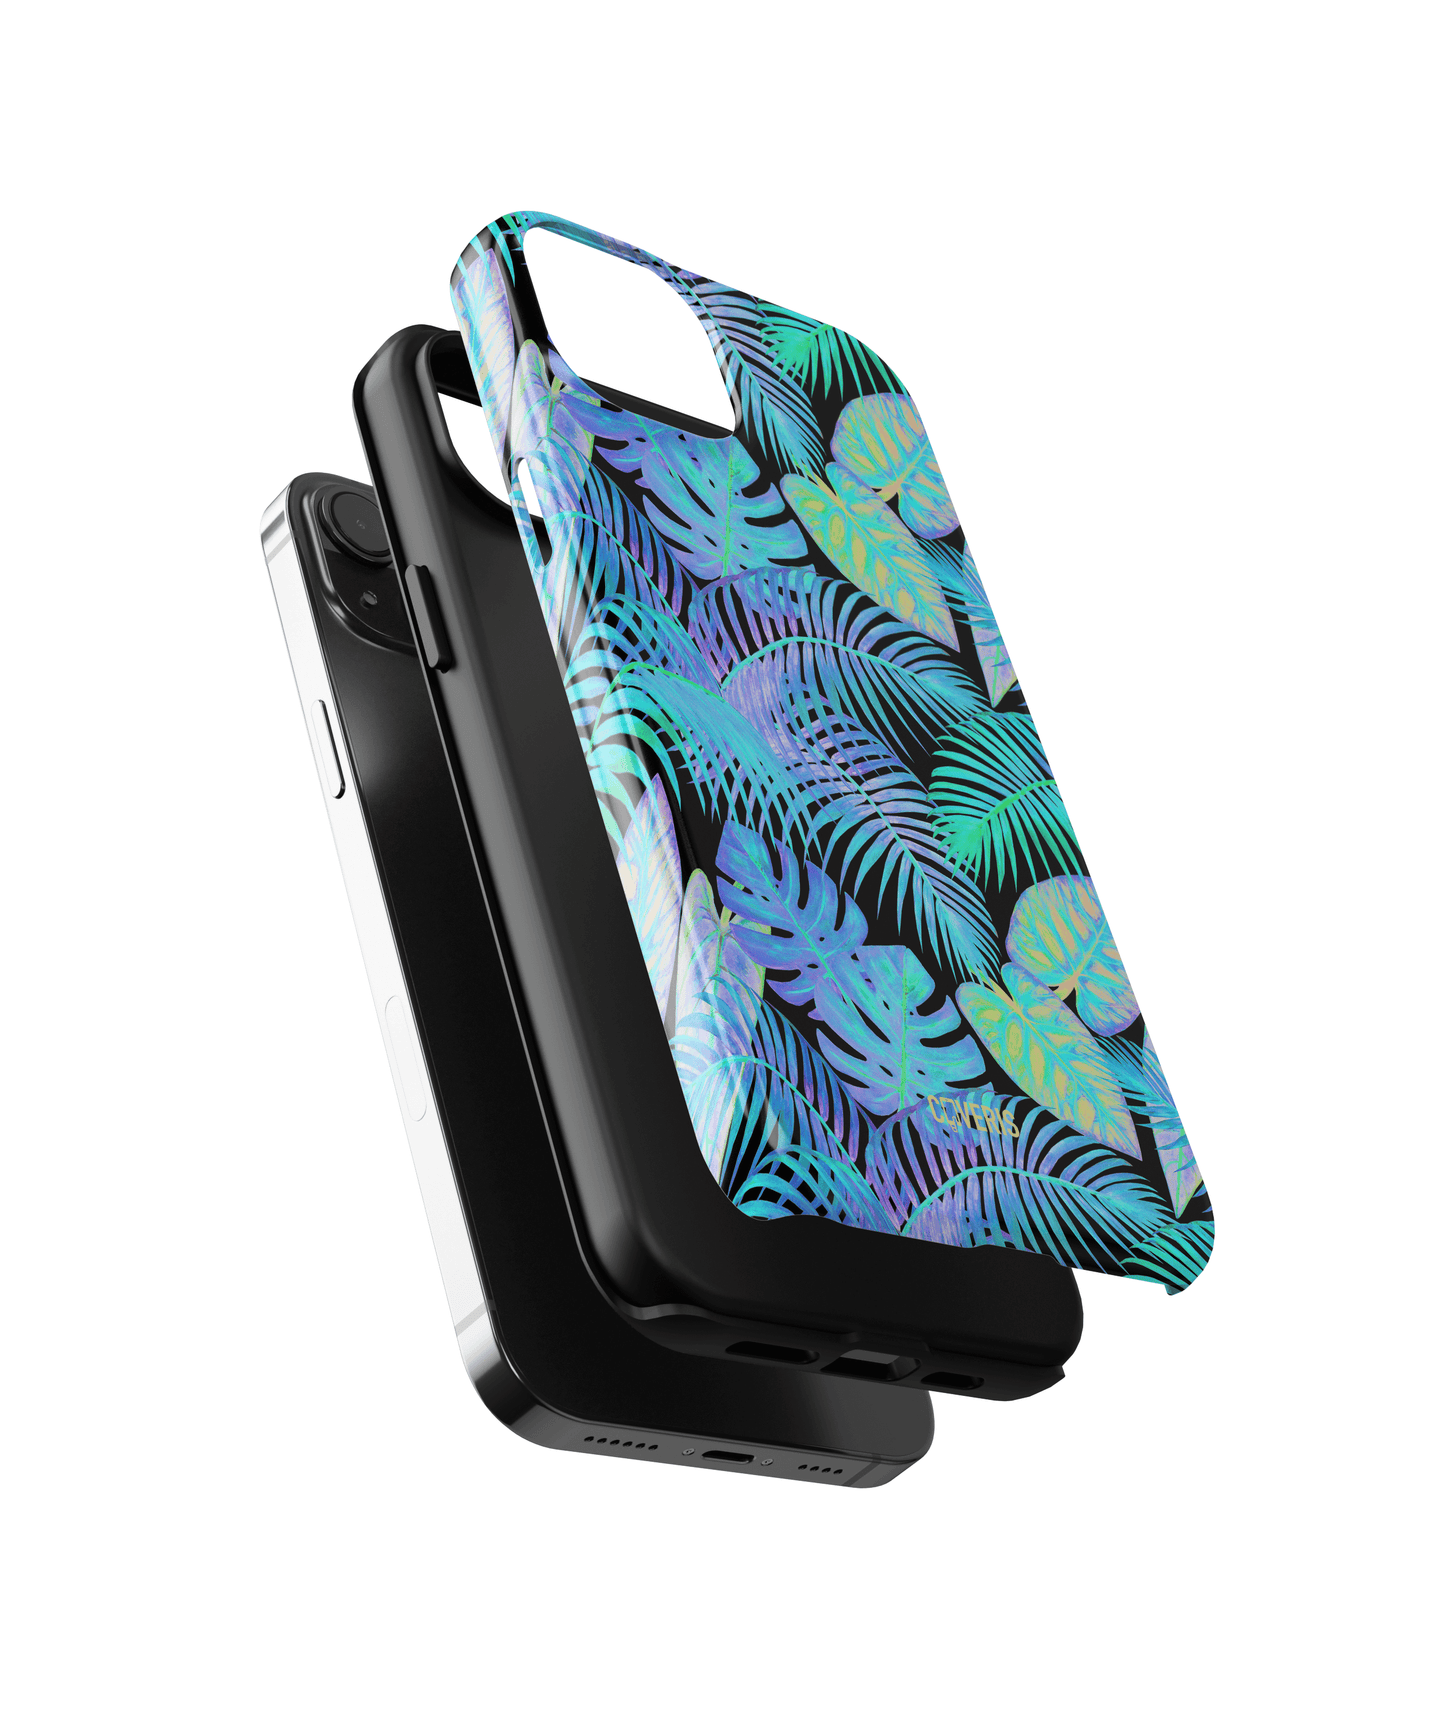 Tropic - iPhone 5 phone case